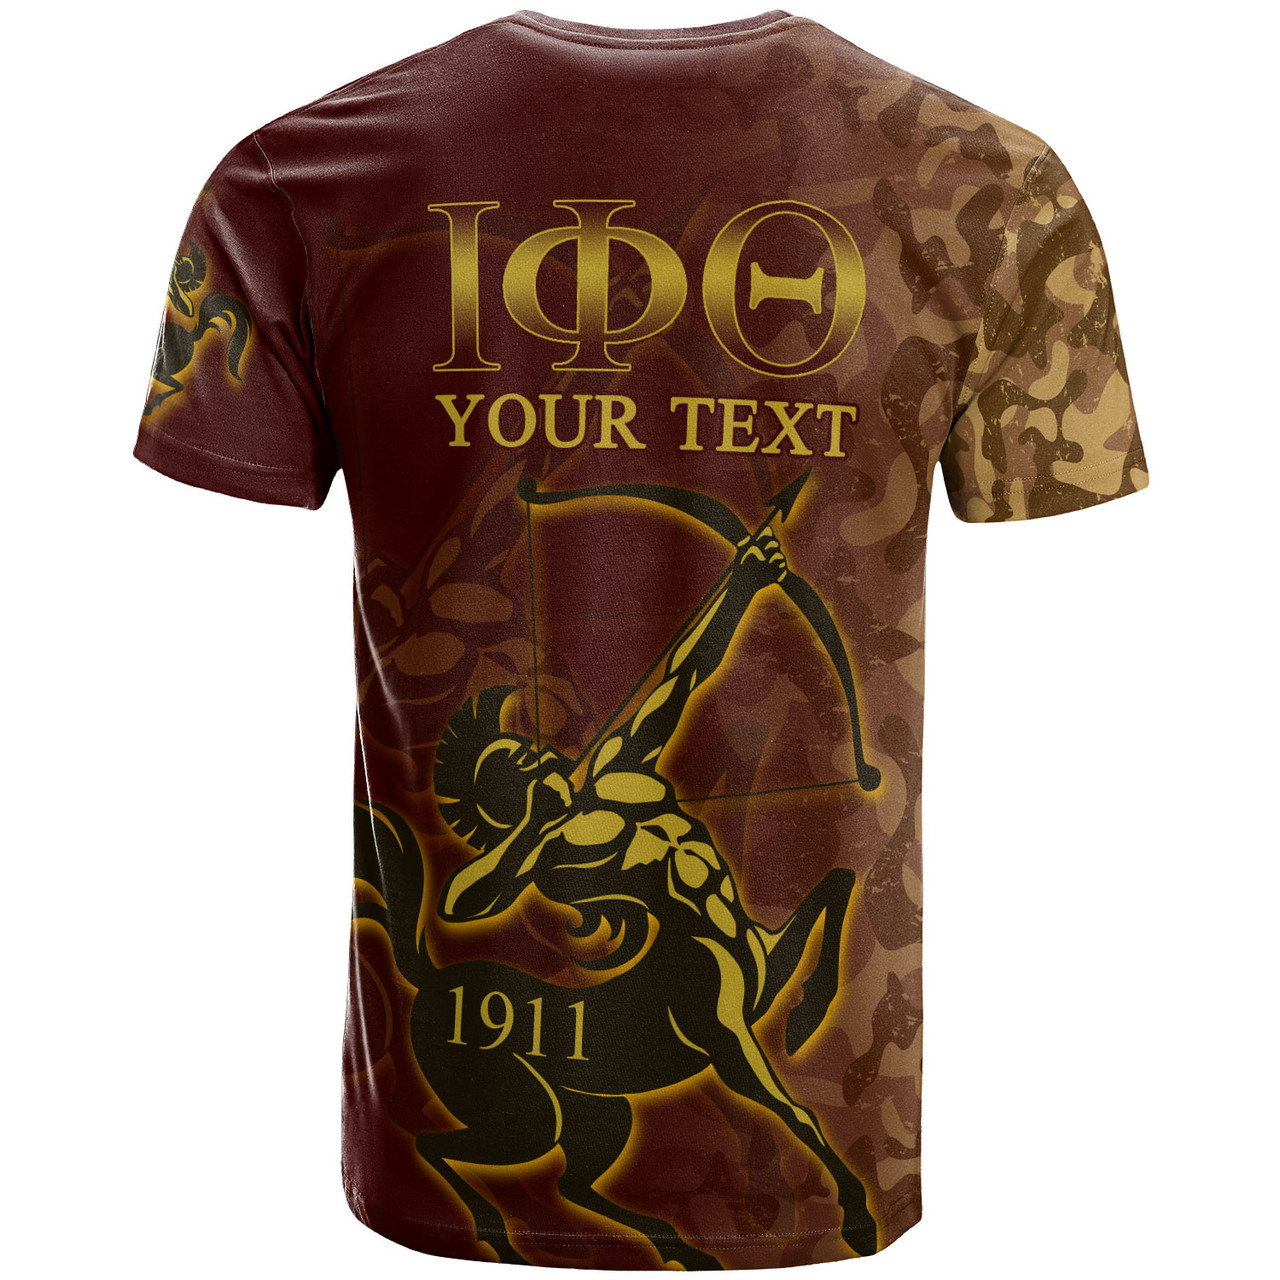 Iota Phi Theta T-Shirt - Custom Fraternity Hand Gesture Camouflage Patterns T-Shirt